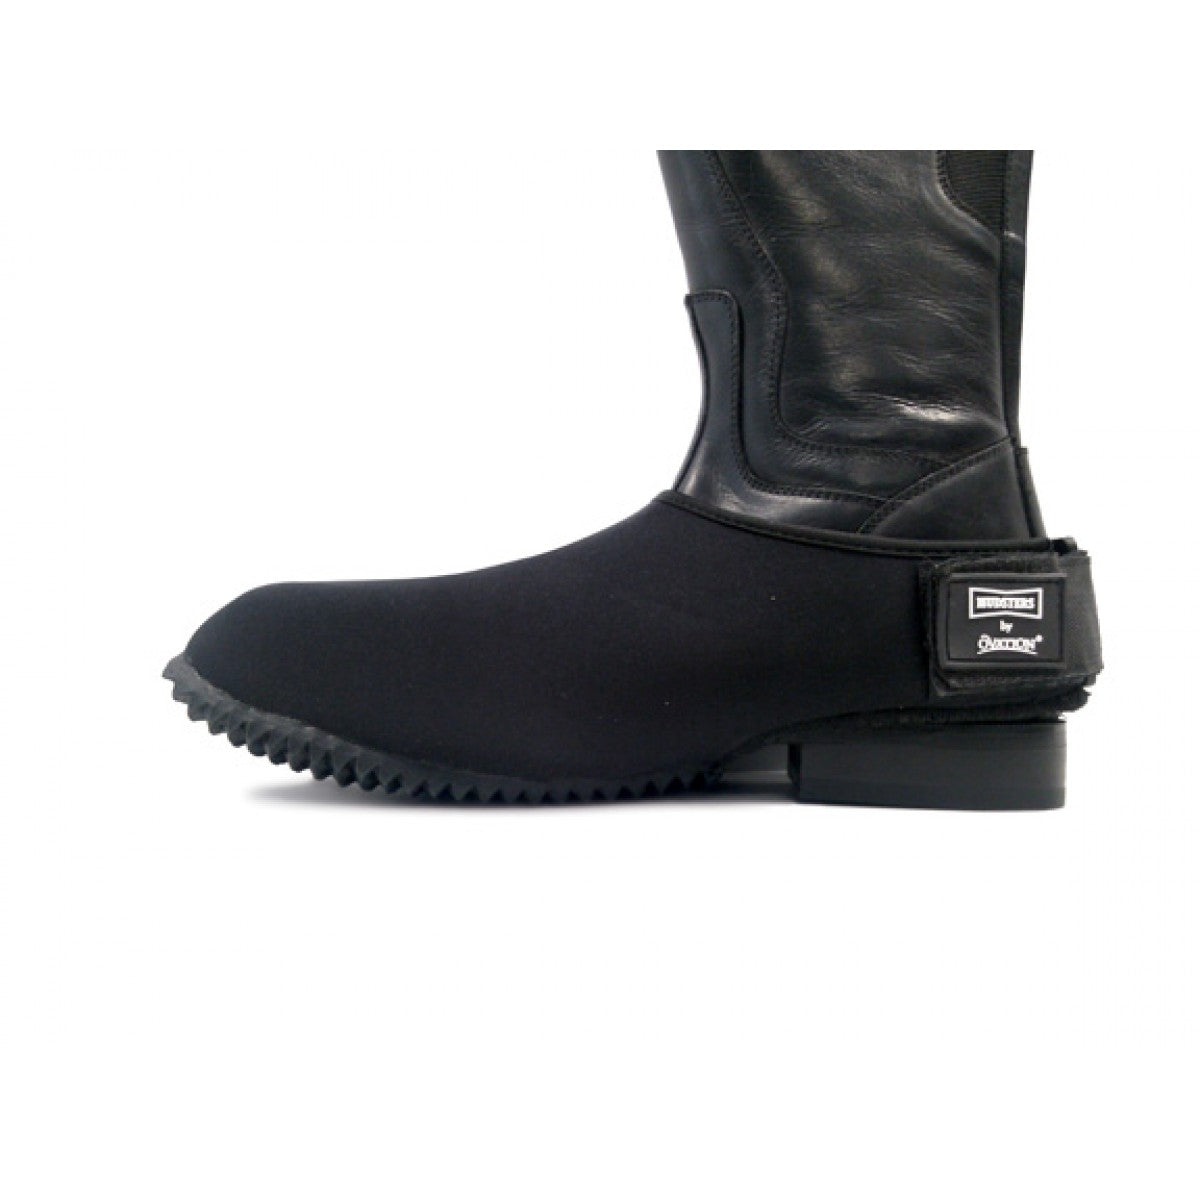 Ovation® Mudster Shoe & Boot Saver